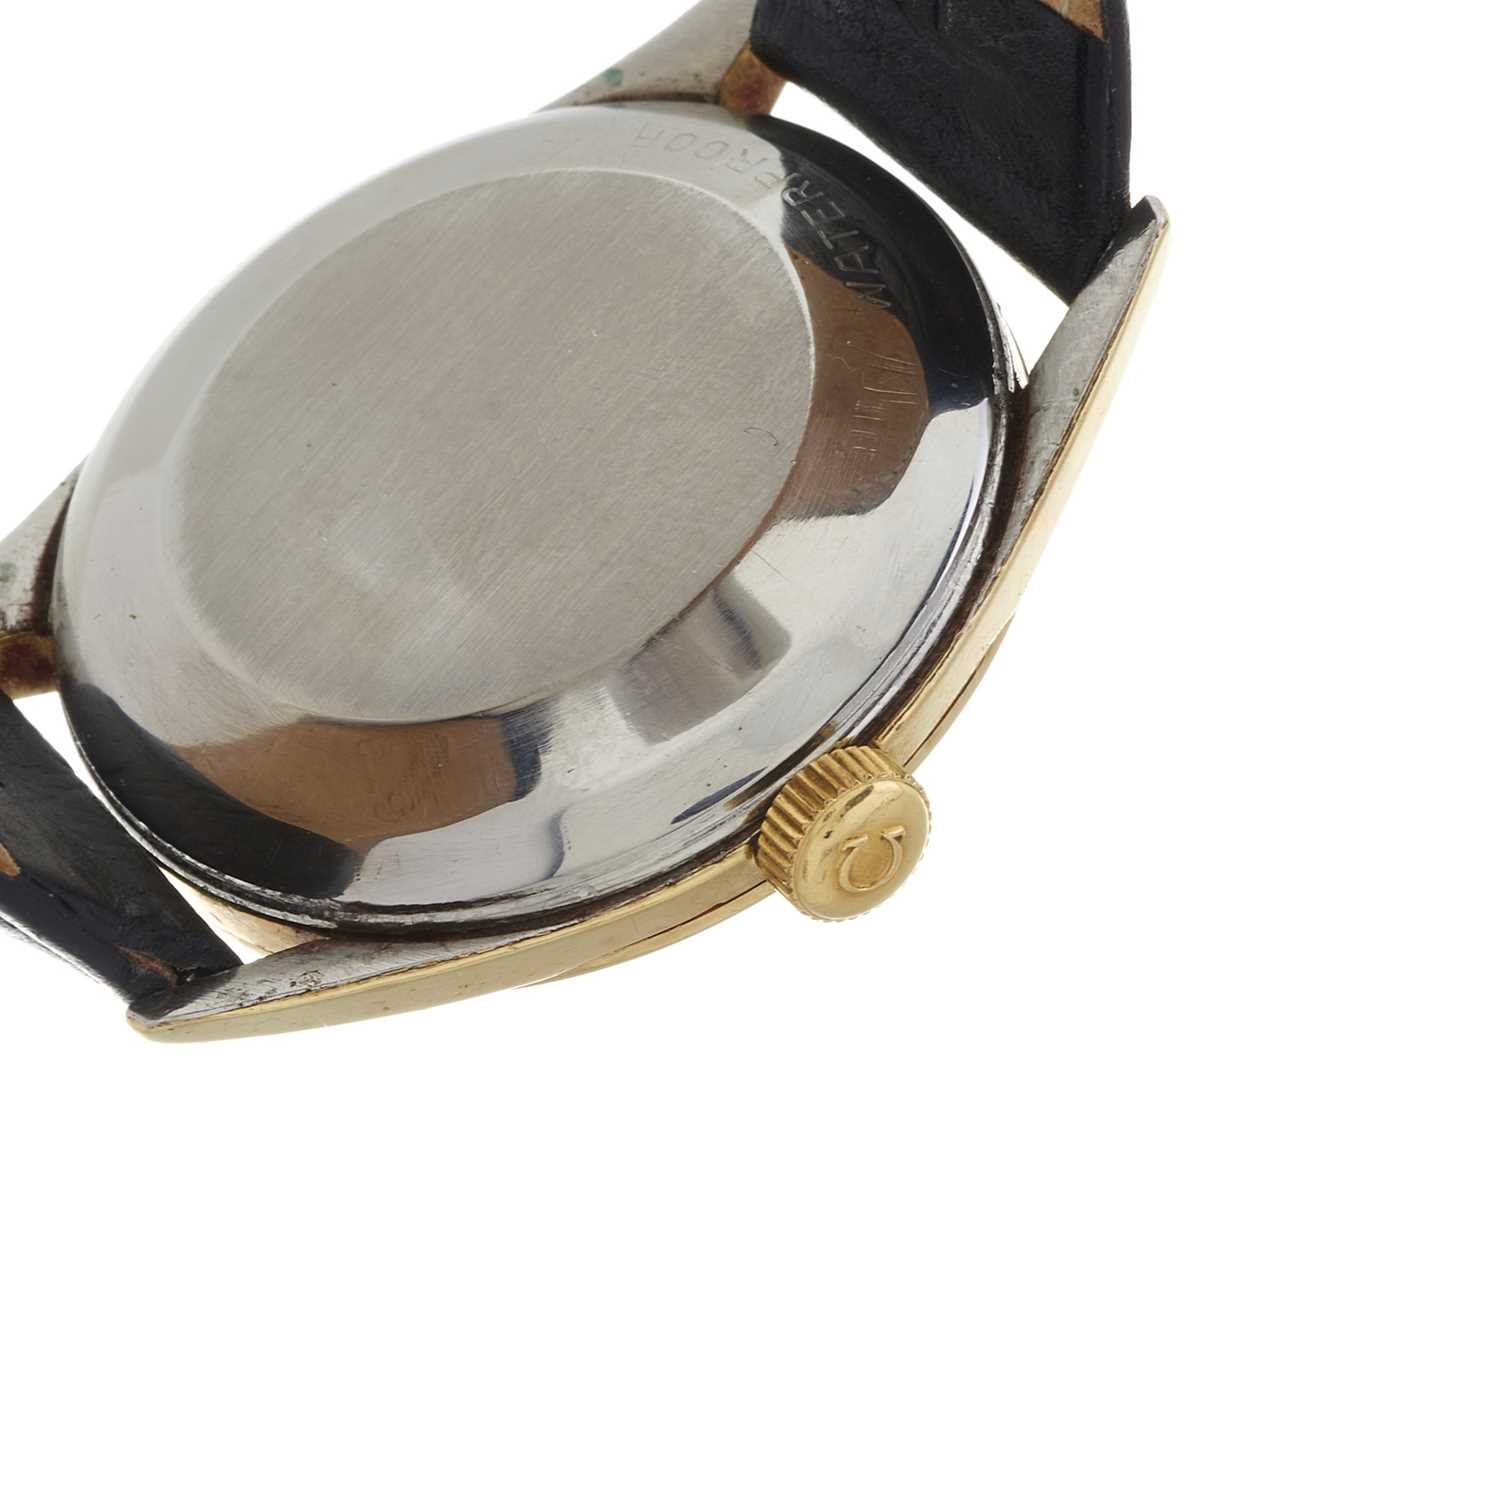 Omega, a Seamaster automatic wrist watch - Image 3 of 3